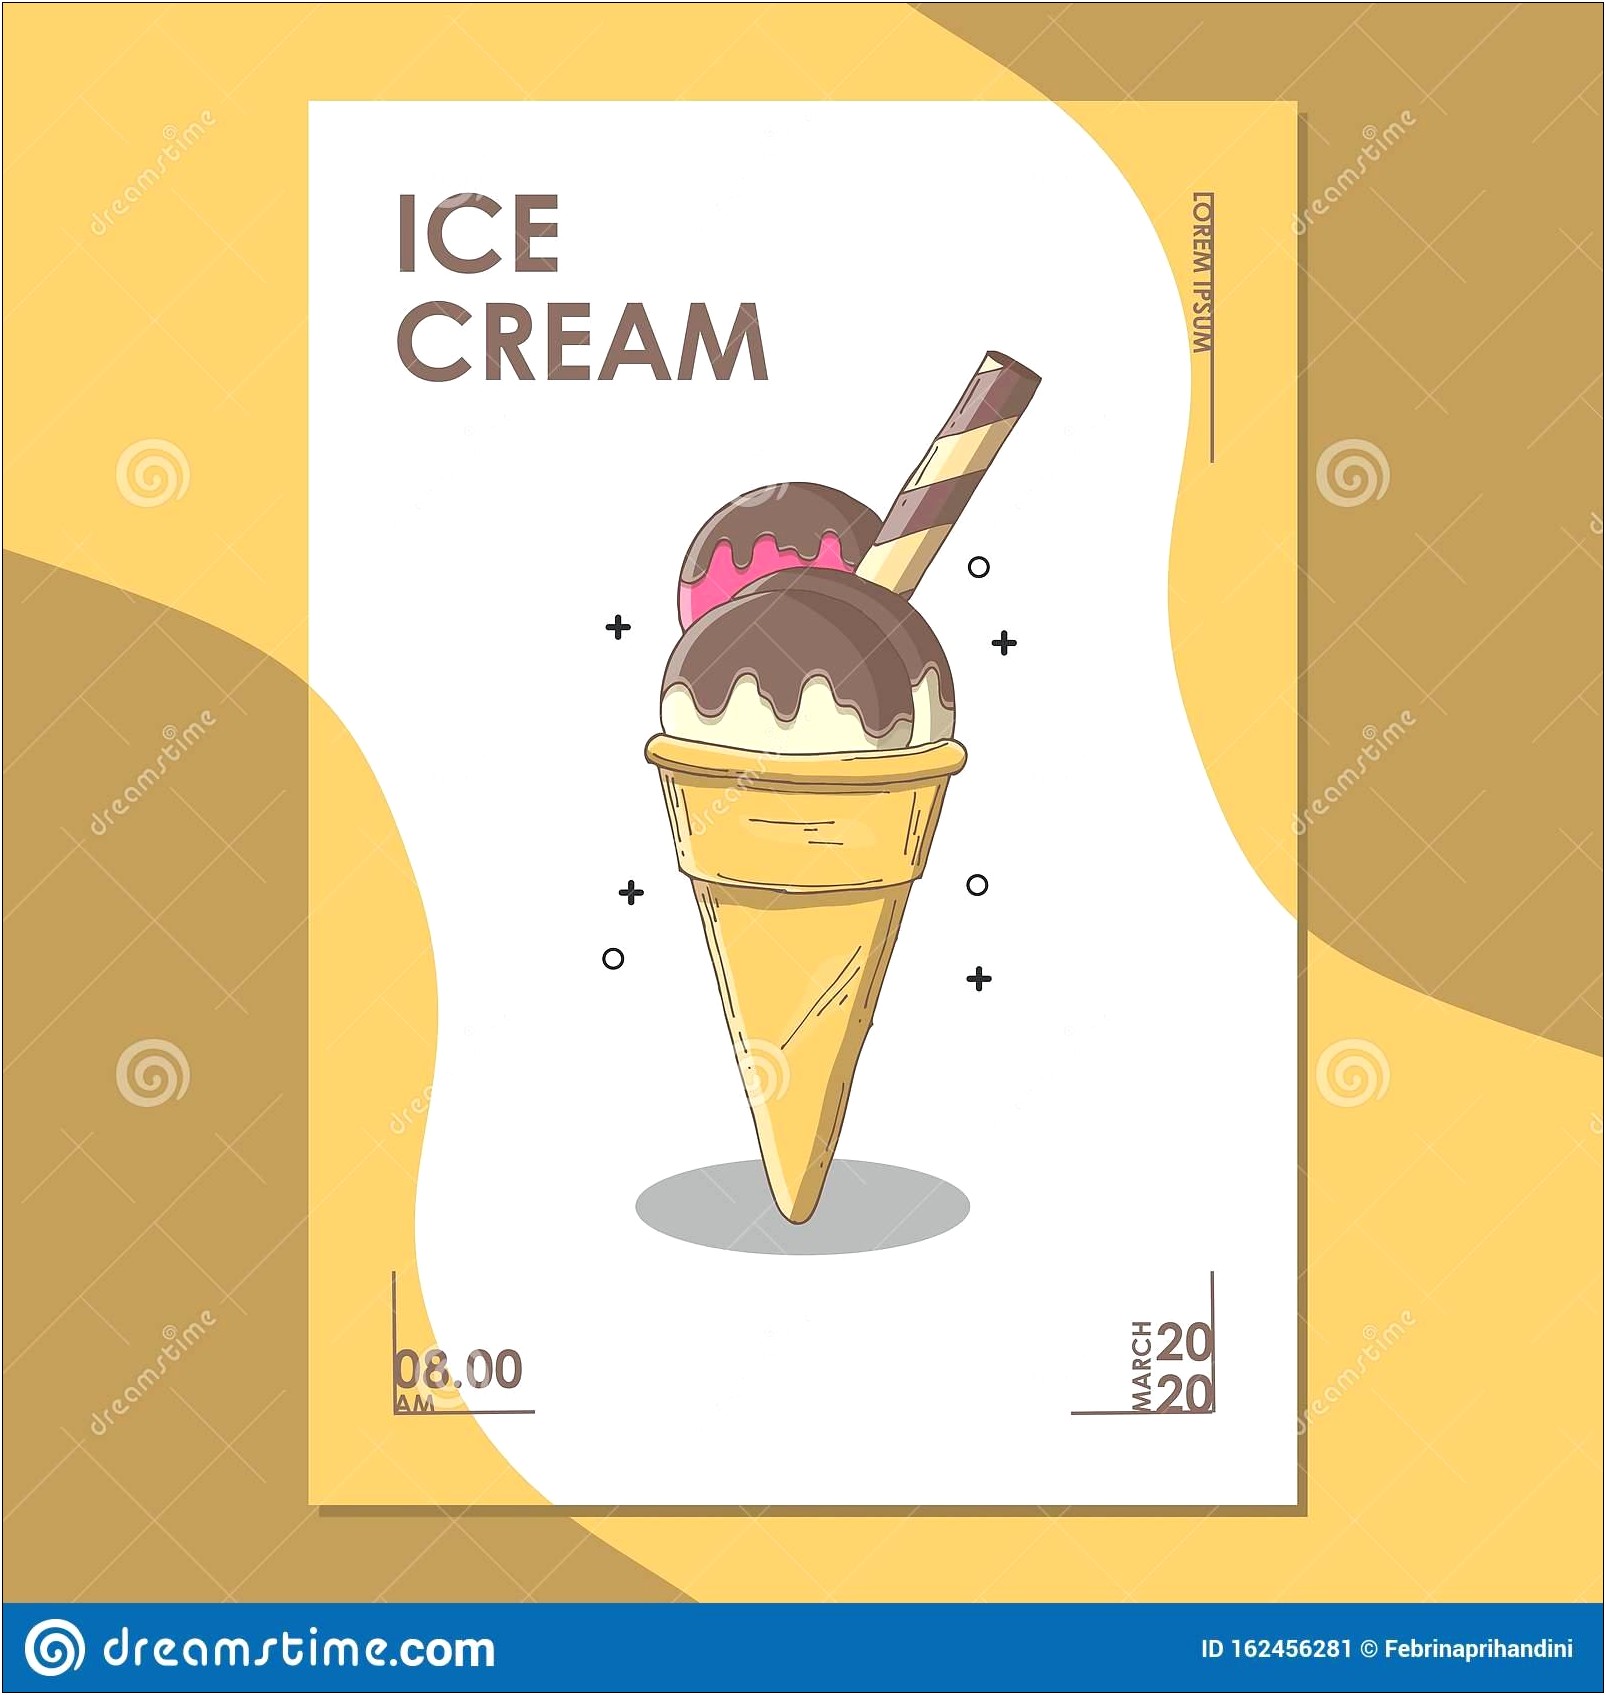 Ice Cream Menu Design Template Free Download